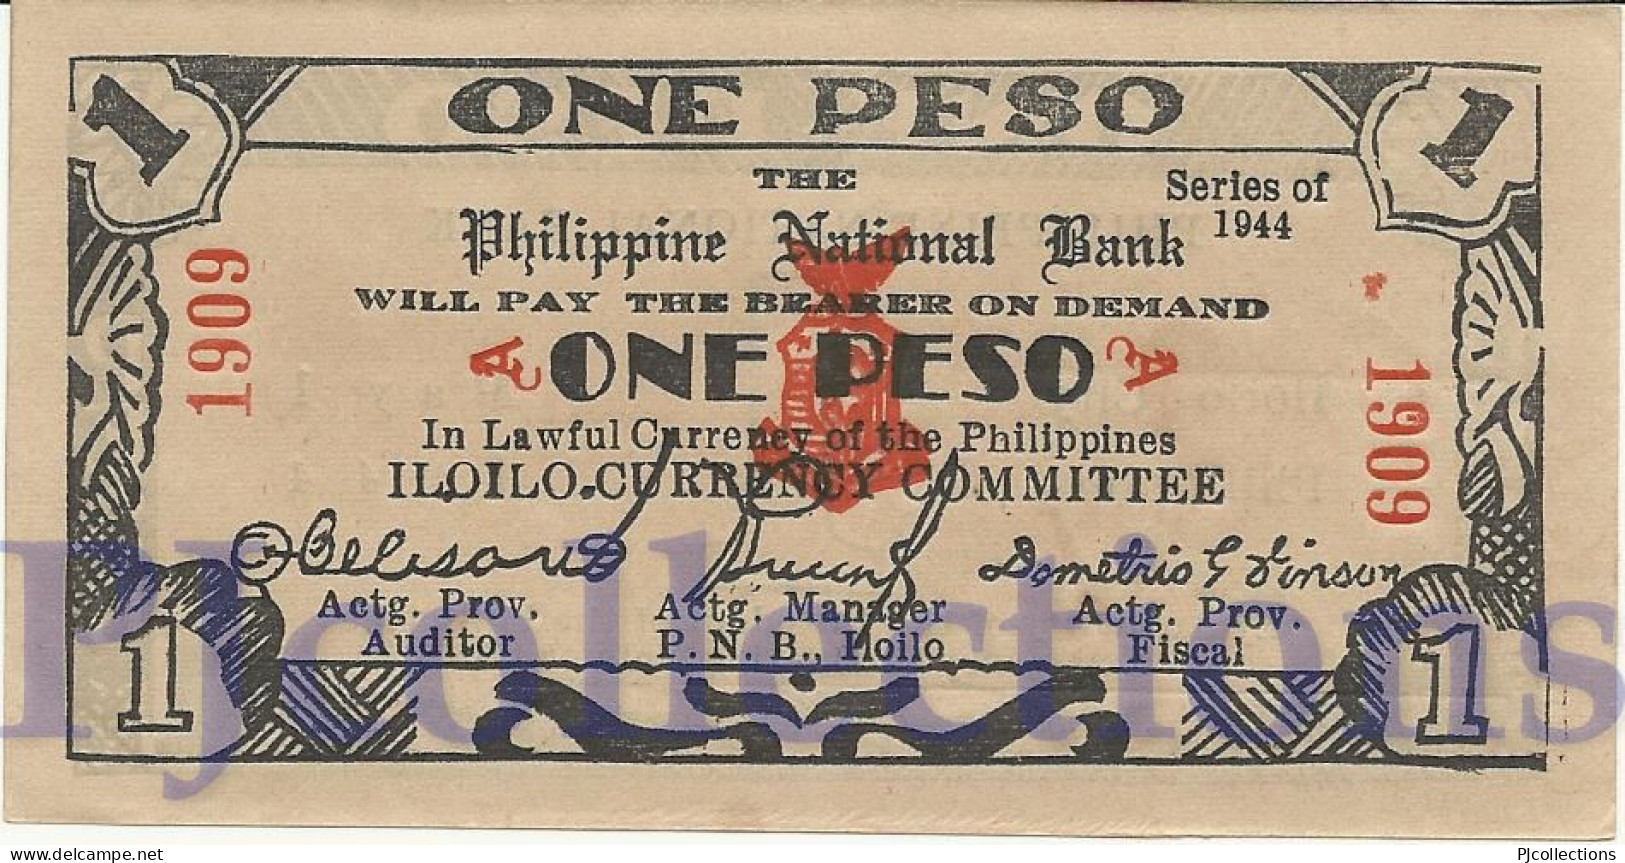 PHILIPPINES 1 PESO 1944 PICK S339 AUNC EMERGENCY BANKNOTE - Filippijnen